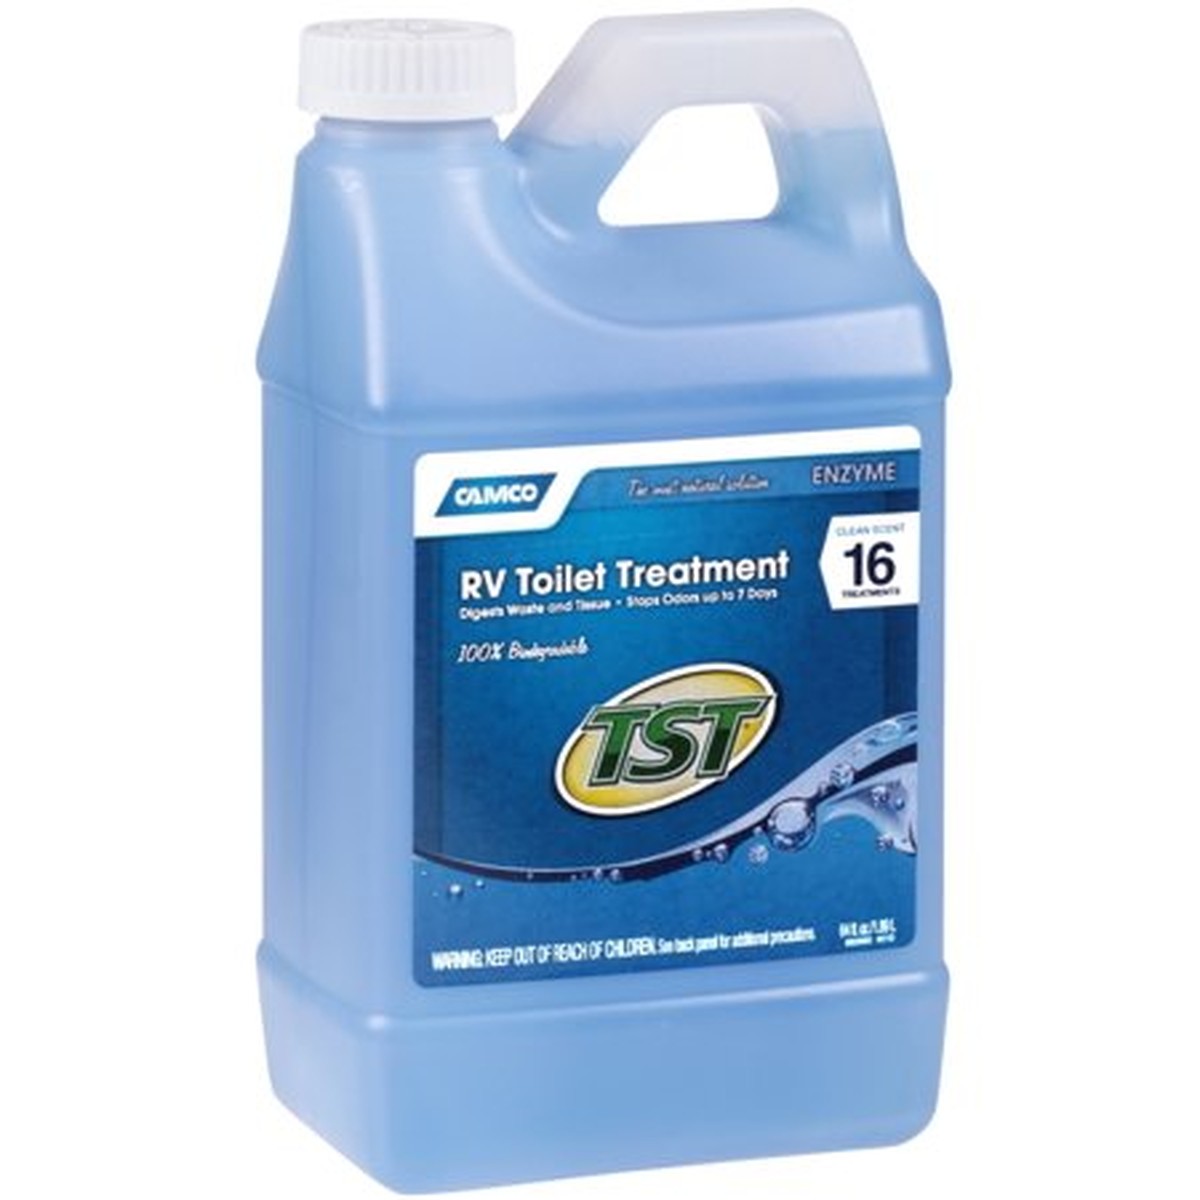 Tst Blue Enzyme Toilet Treatment 64 Oz